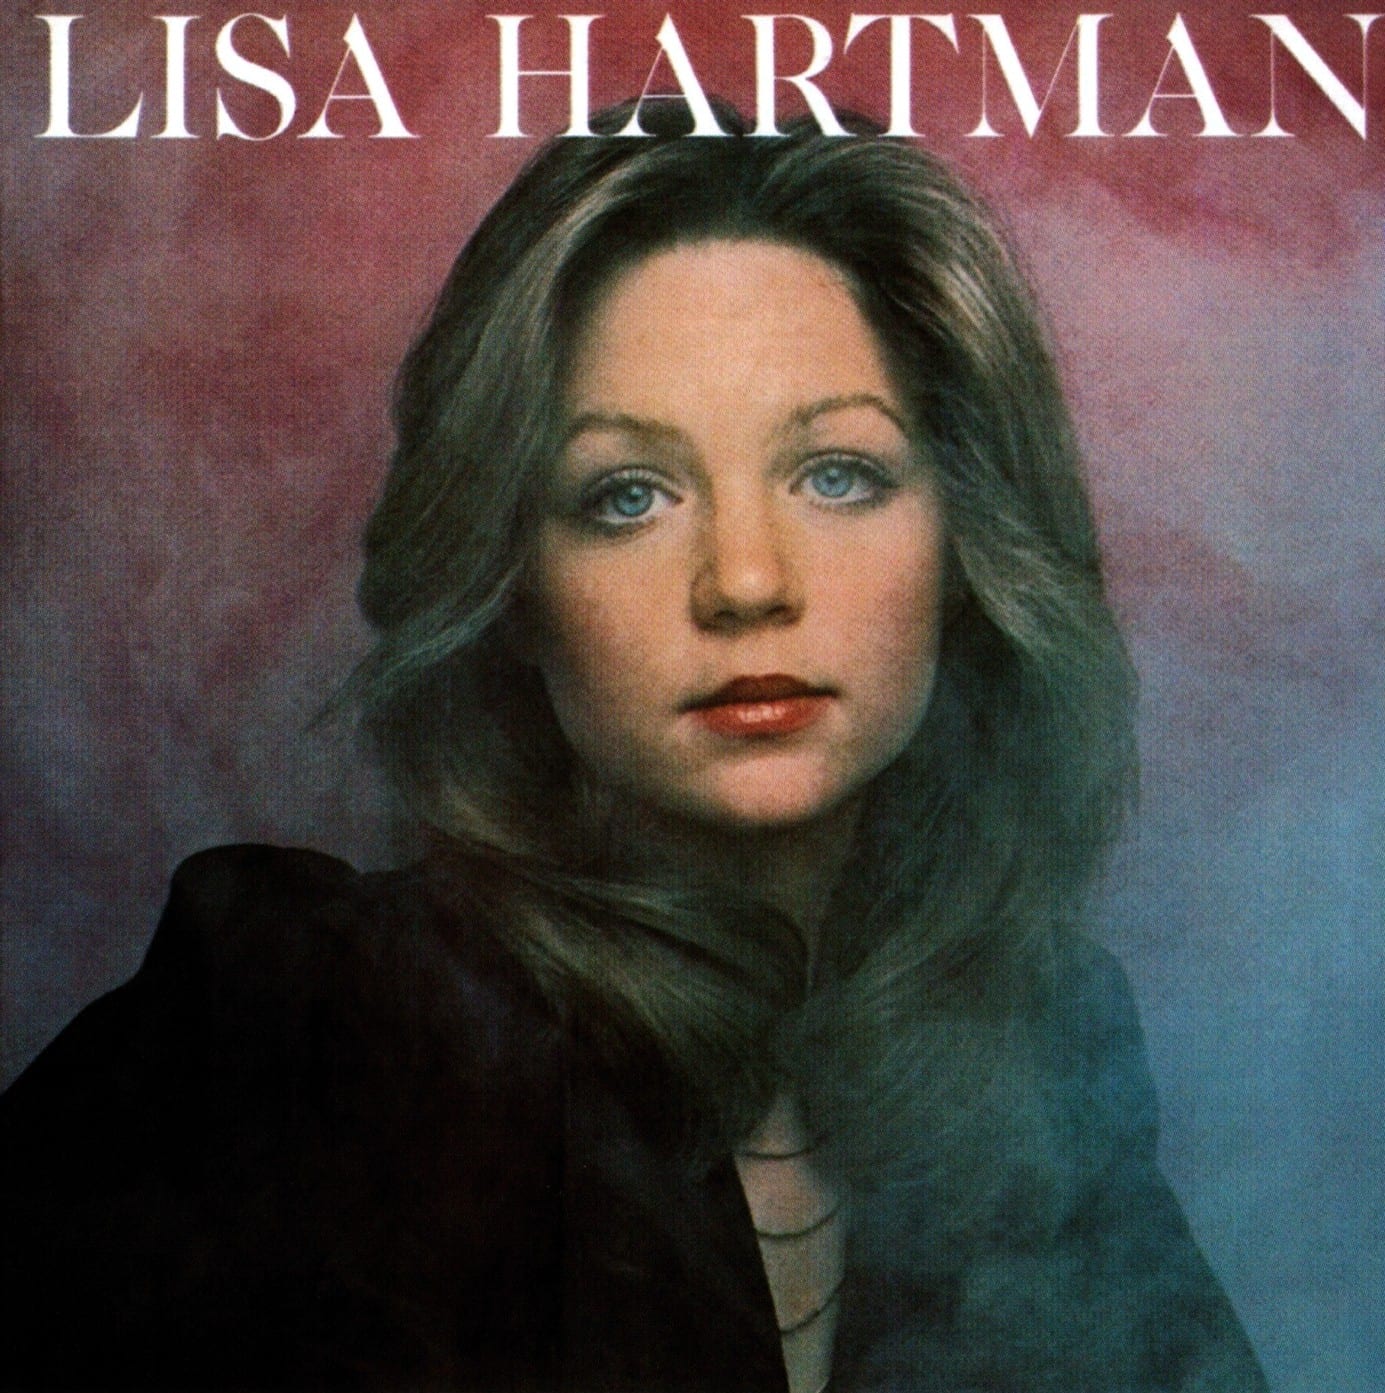 Lisa Hartman - Lisa Hartman (EXPANDED EDITION) (1975) CD 1